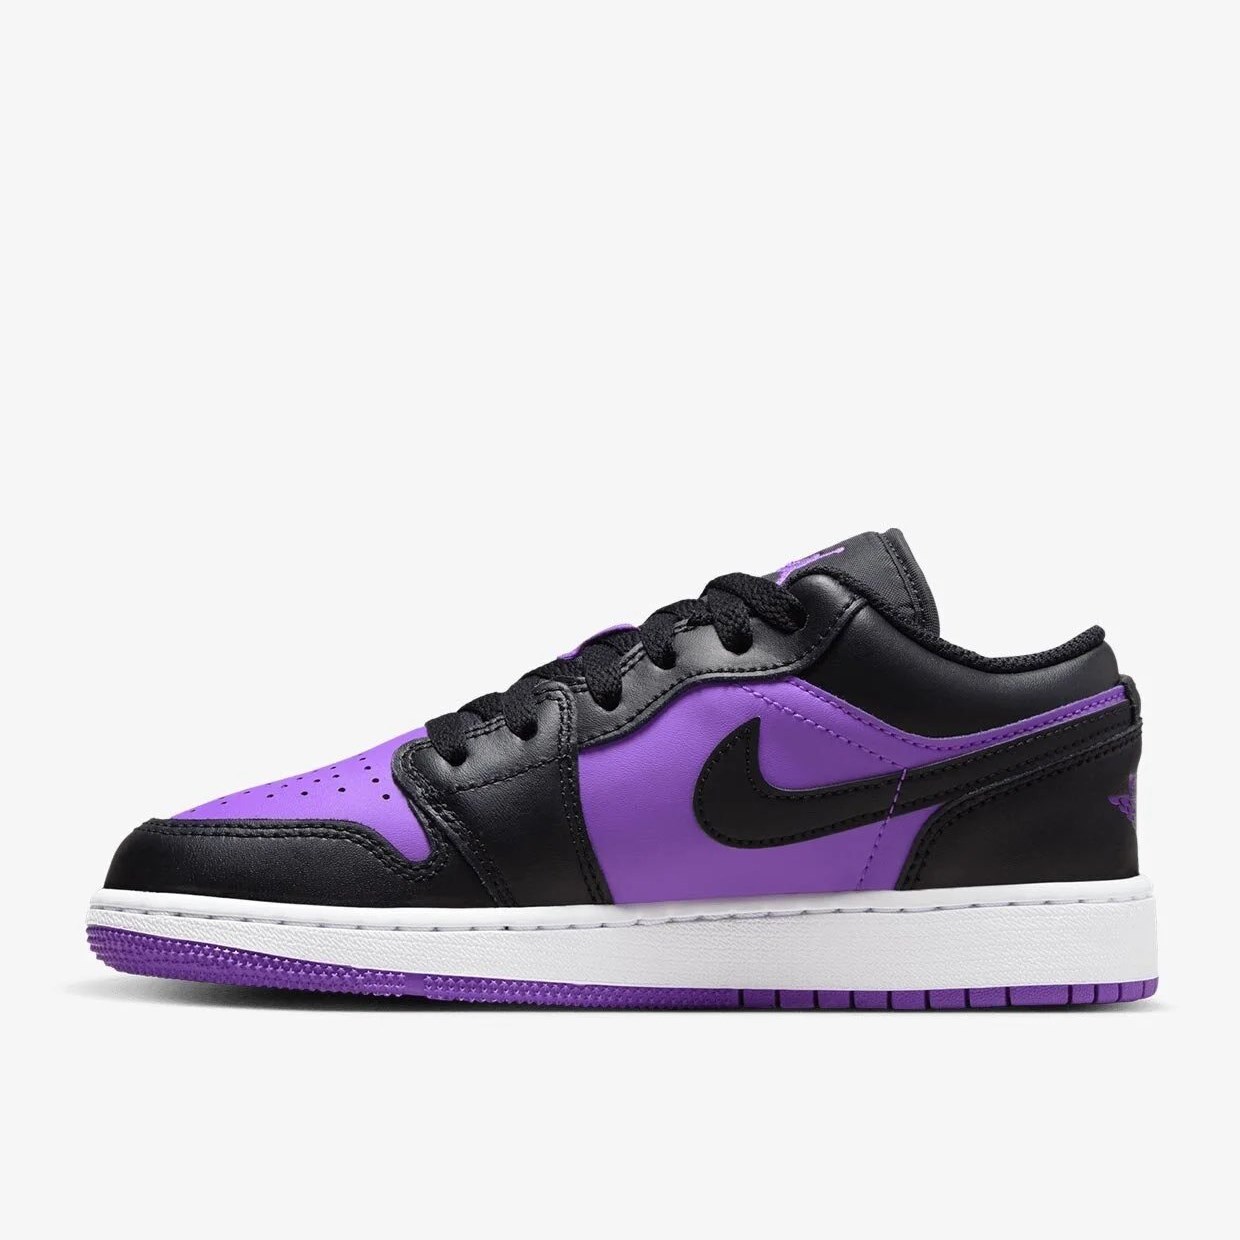 Nike Air Jordan 1 Retro Low Top Court Erkek Spor Ayakkabı Purple - Black - White